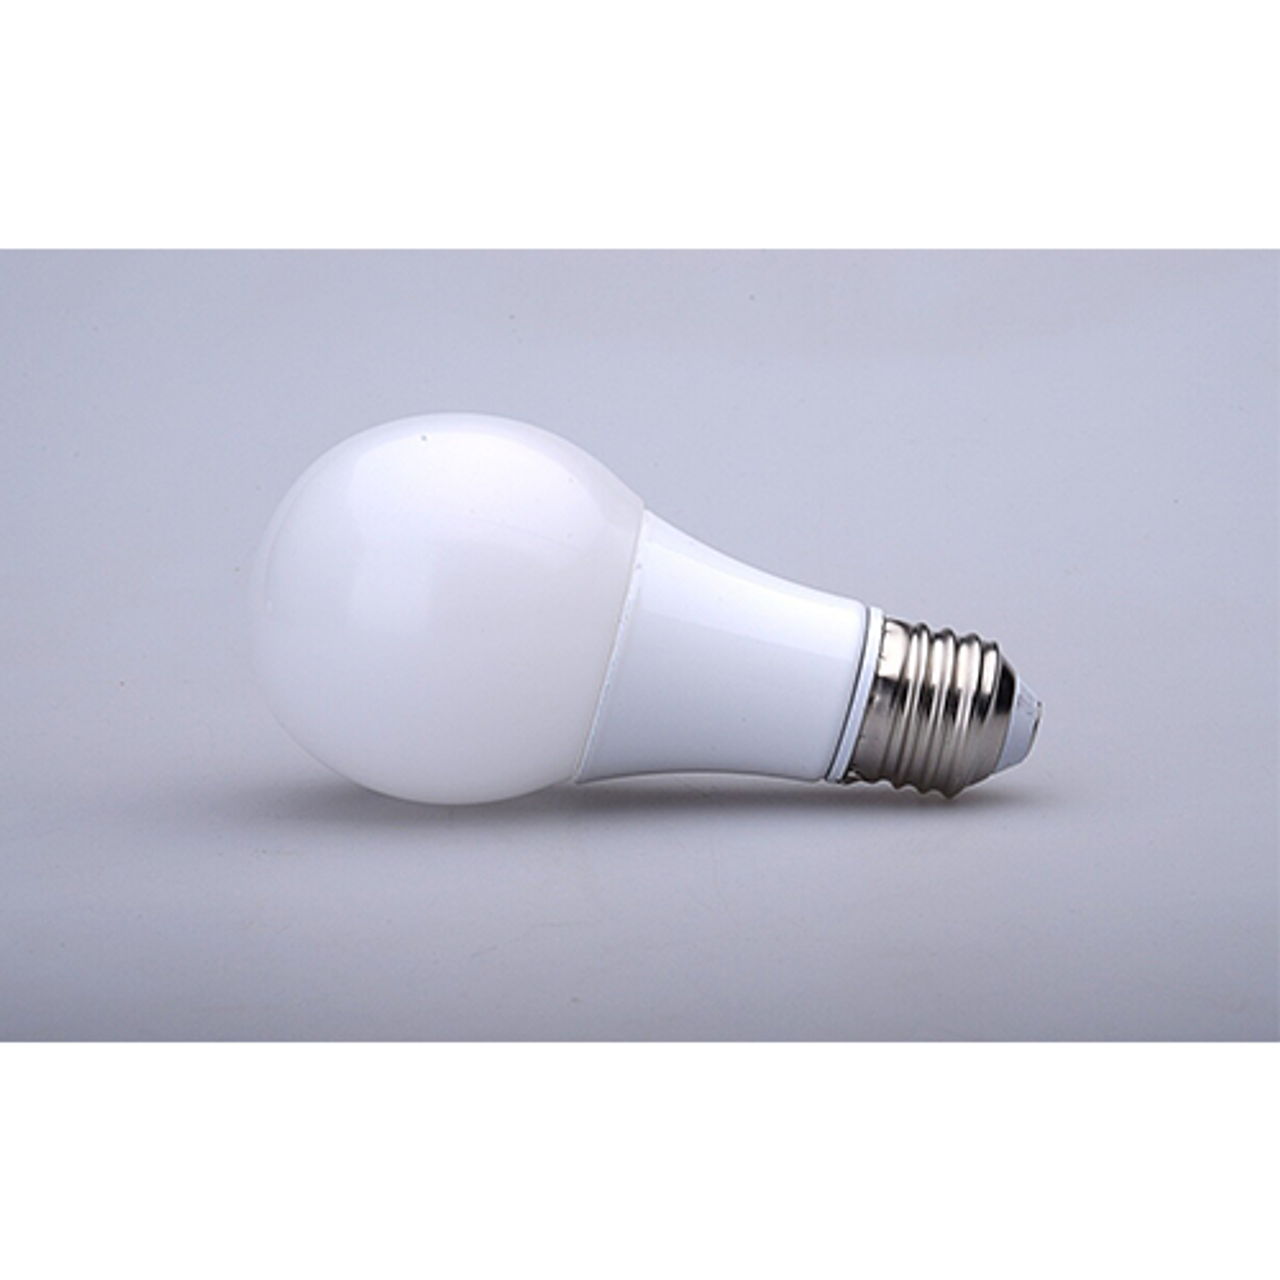 A19 LED Light Bulb, 9 Watt, 800 Lumens, 2700K